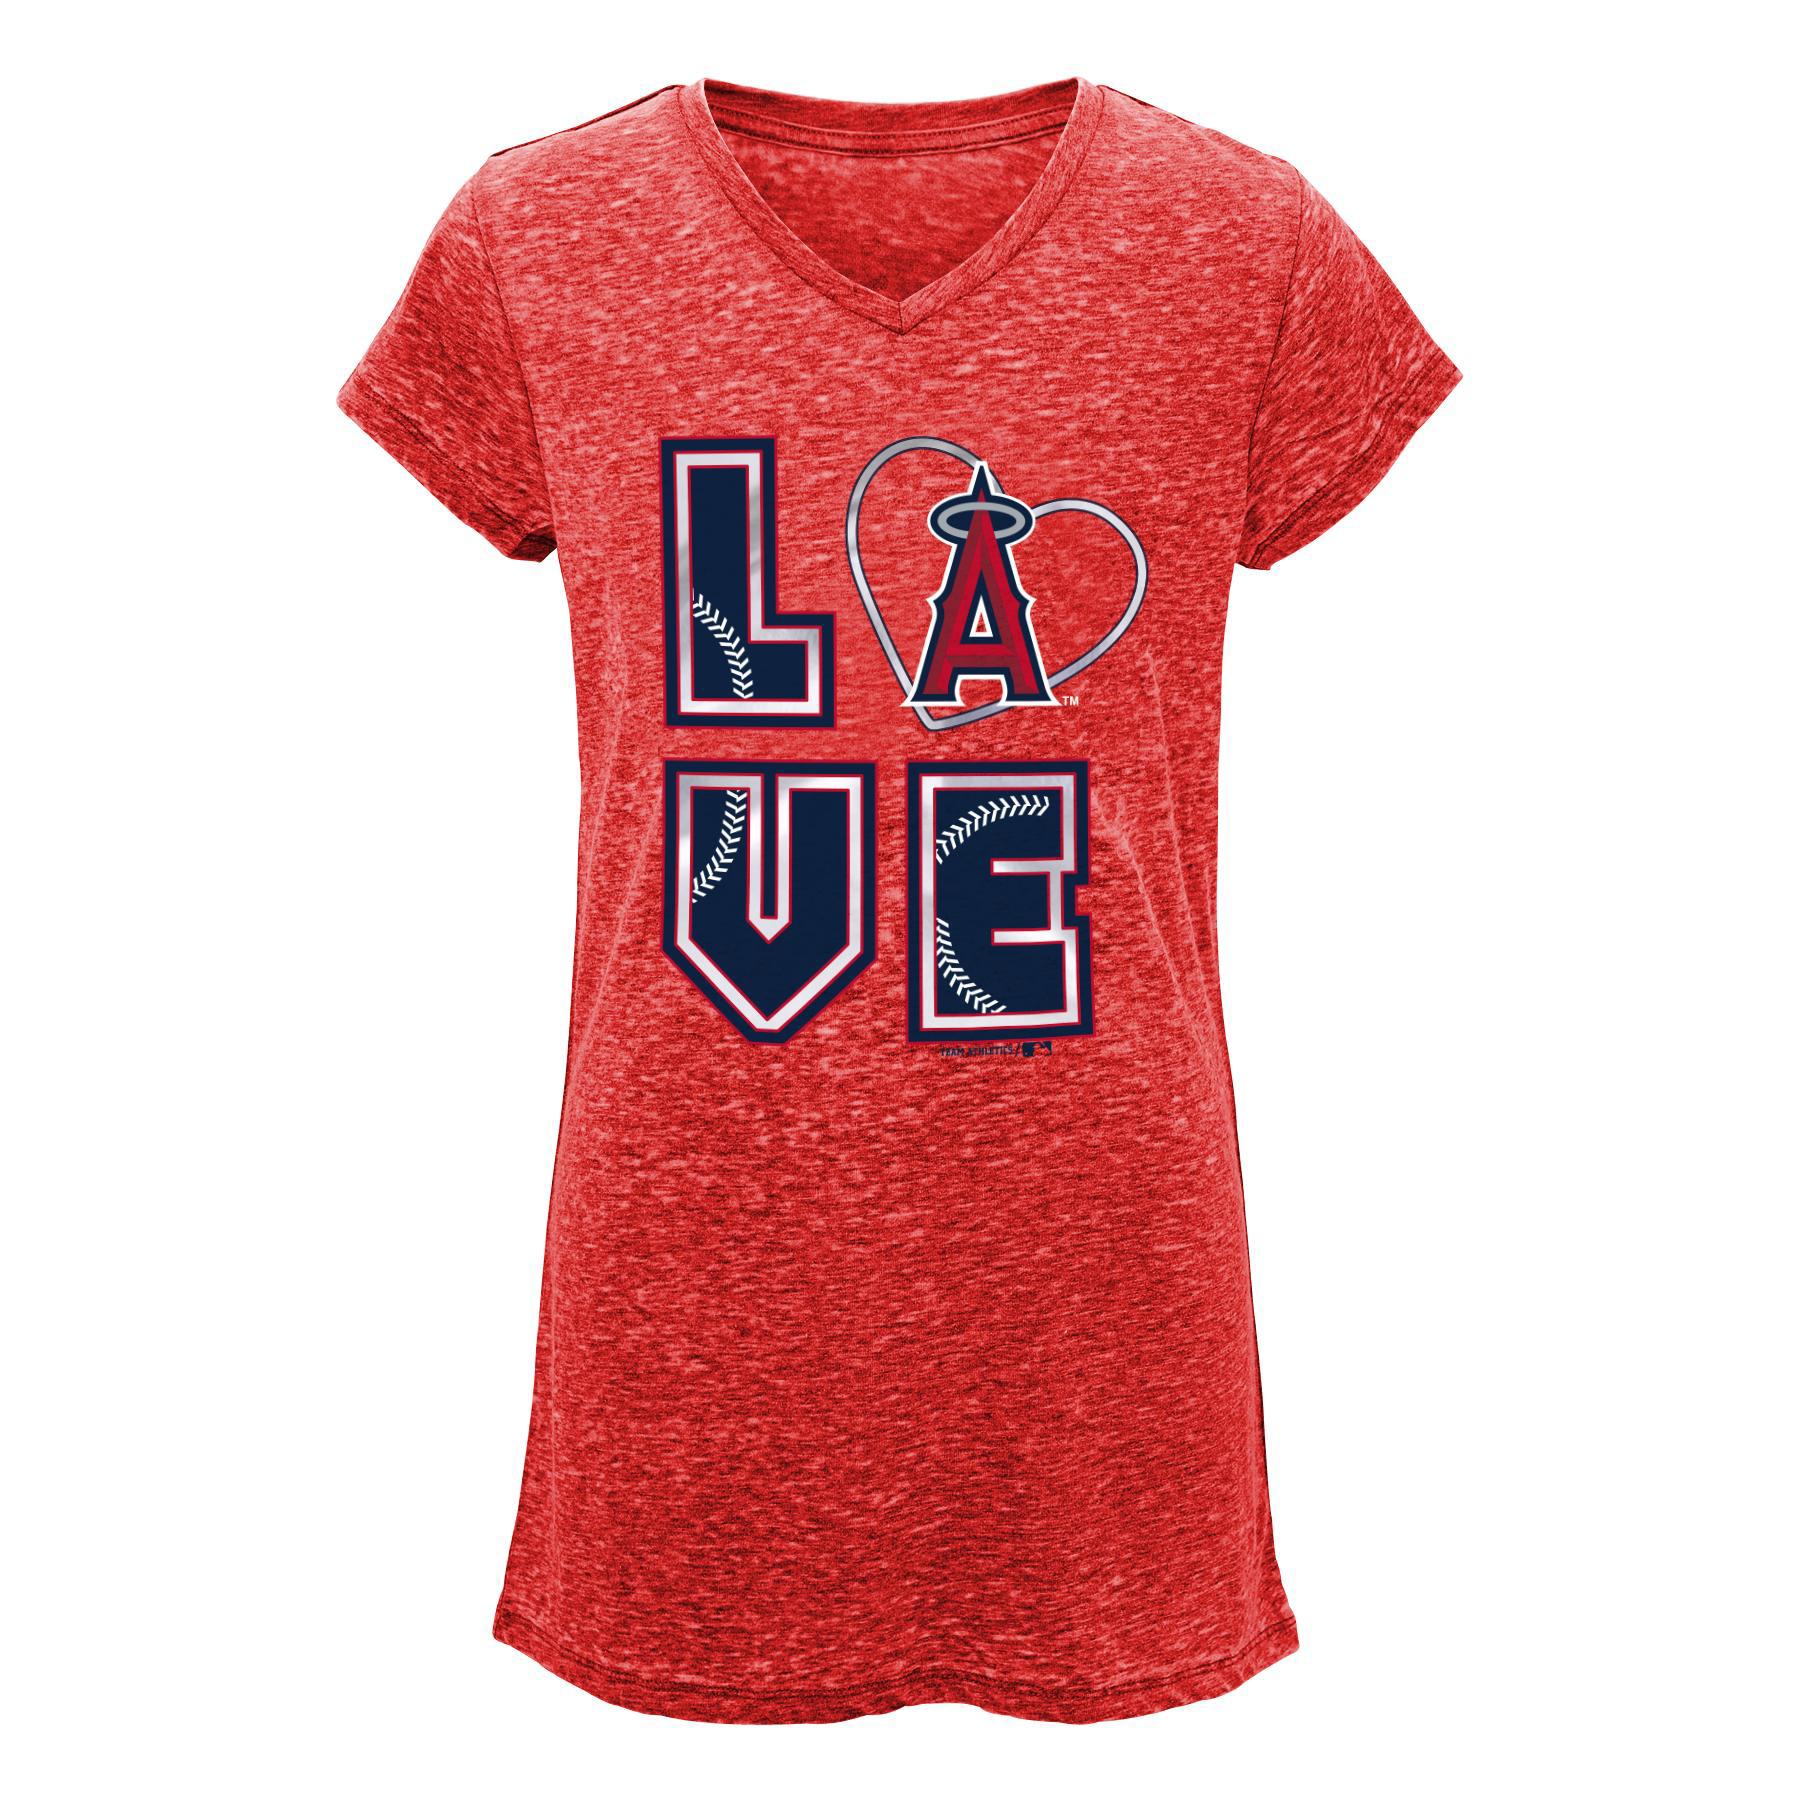 MLB Girls' Burnout T-Shirt - Los Angeles Angels of Anaheim